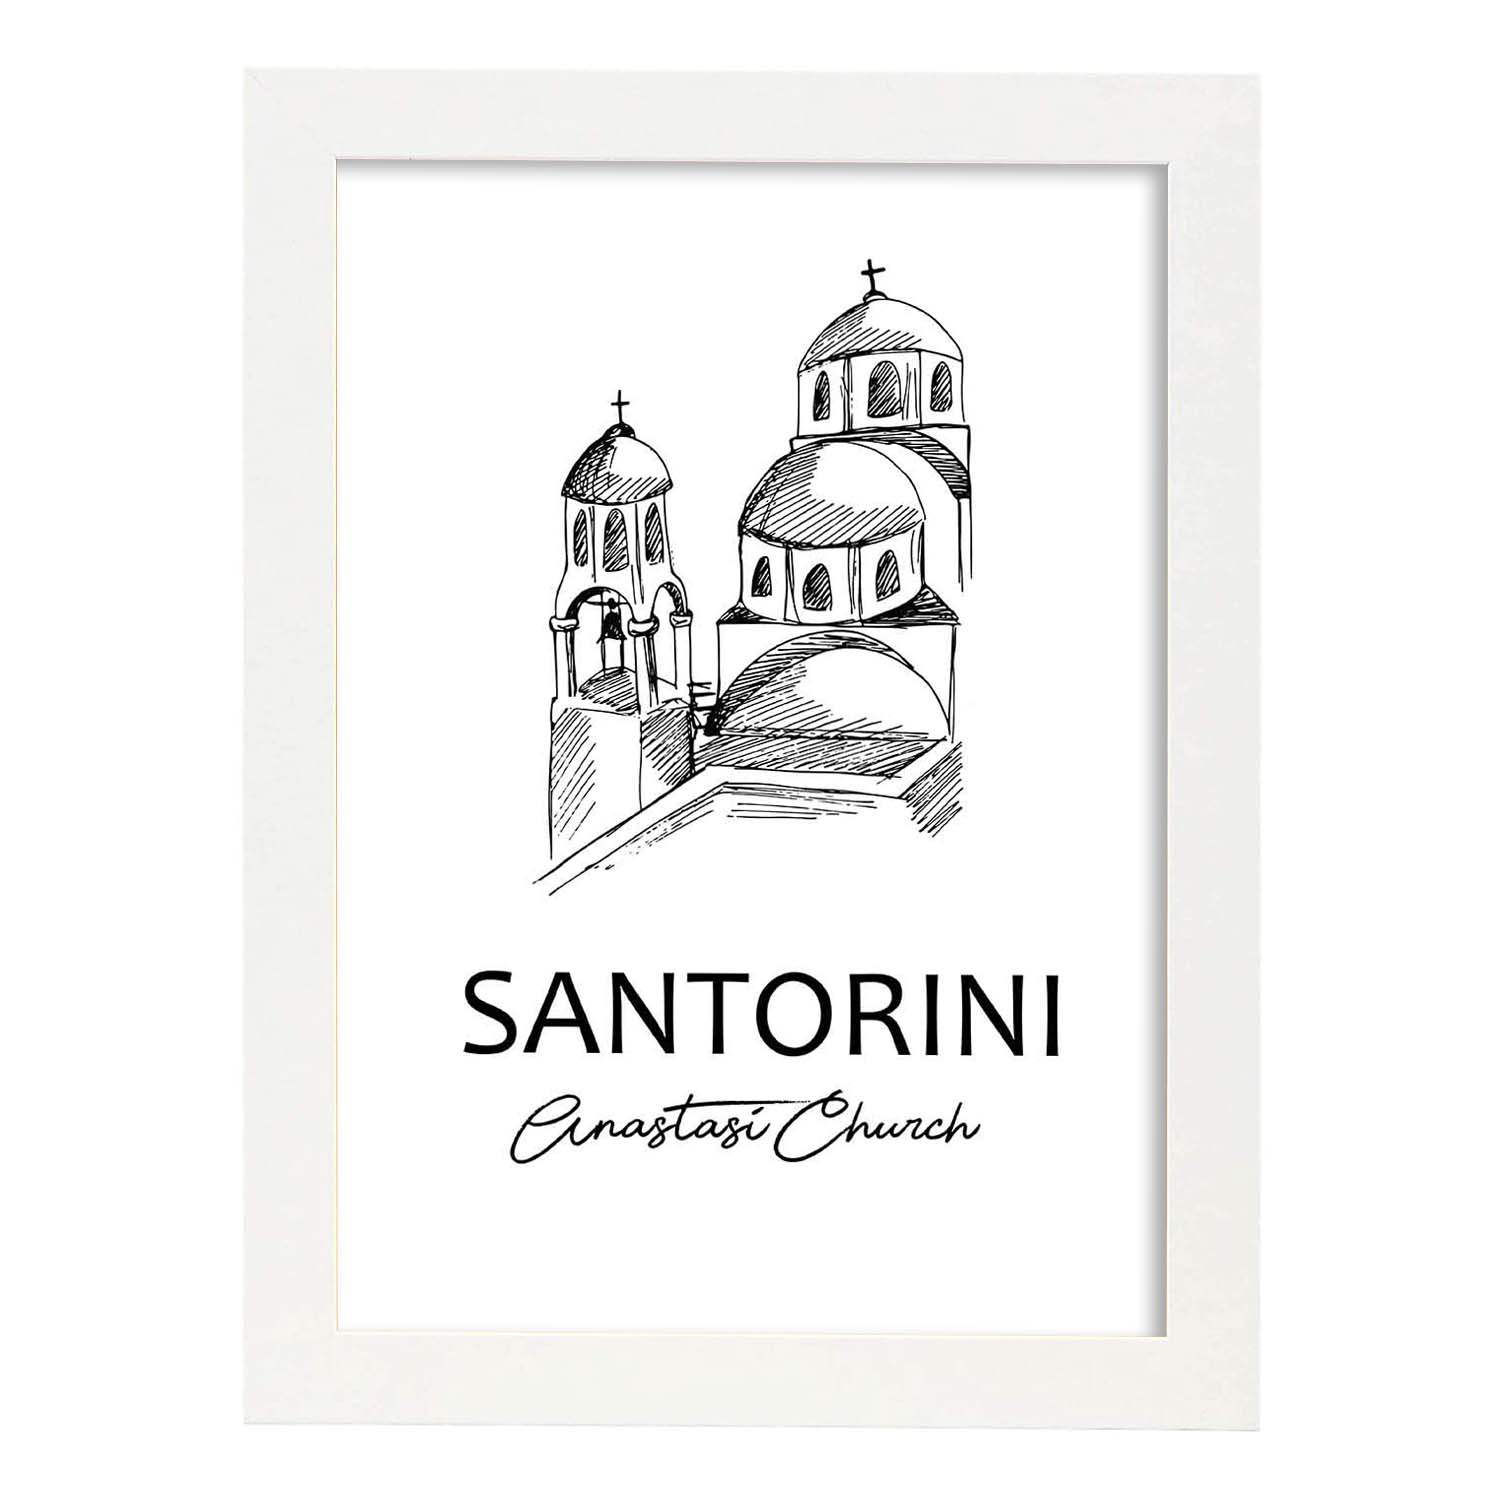 Poster de Santorini - Iglesia Anastasi. Láminas con monumentos de ciudades.-Artwork-Nacnic-A4-Marco Blanco-Nacnic Estudio SL